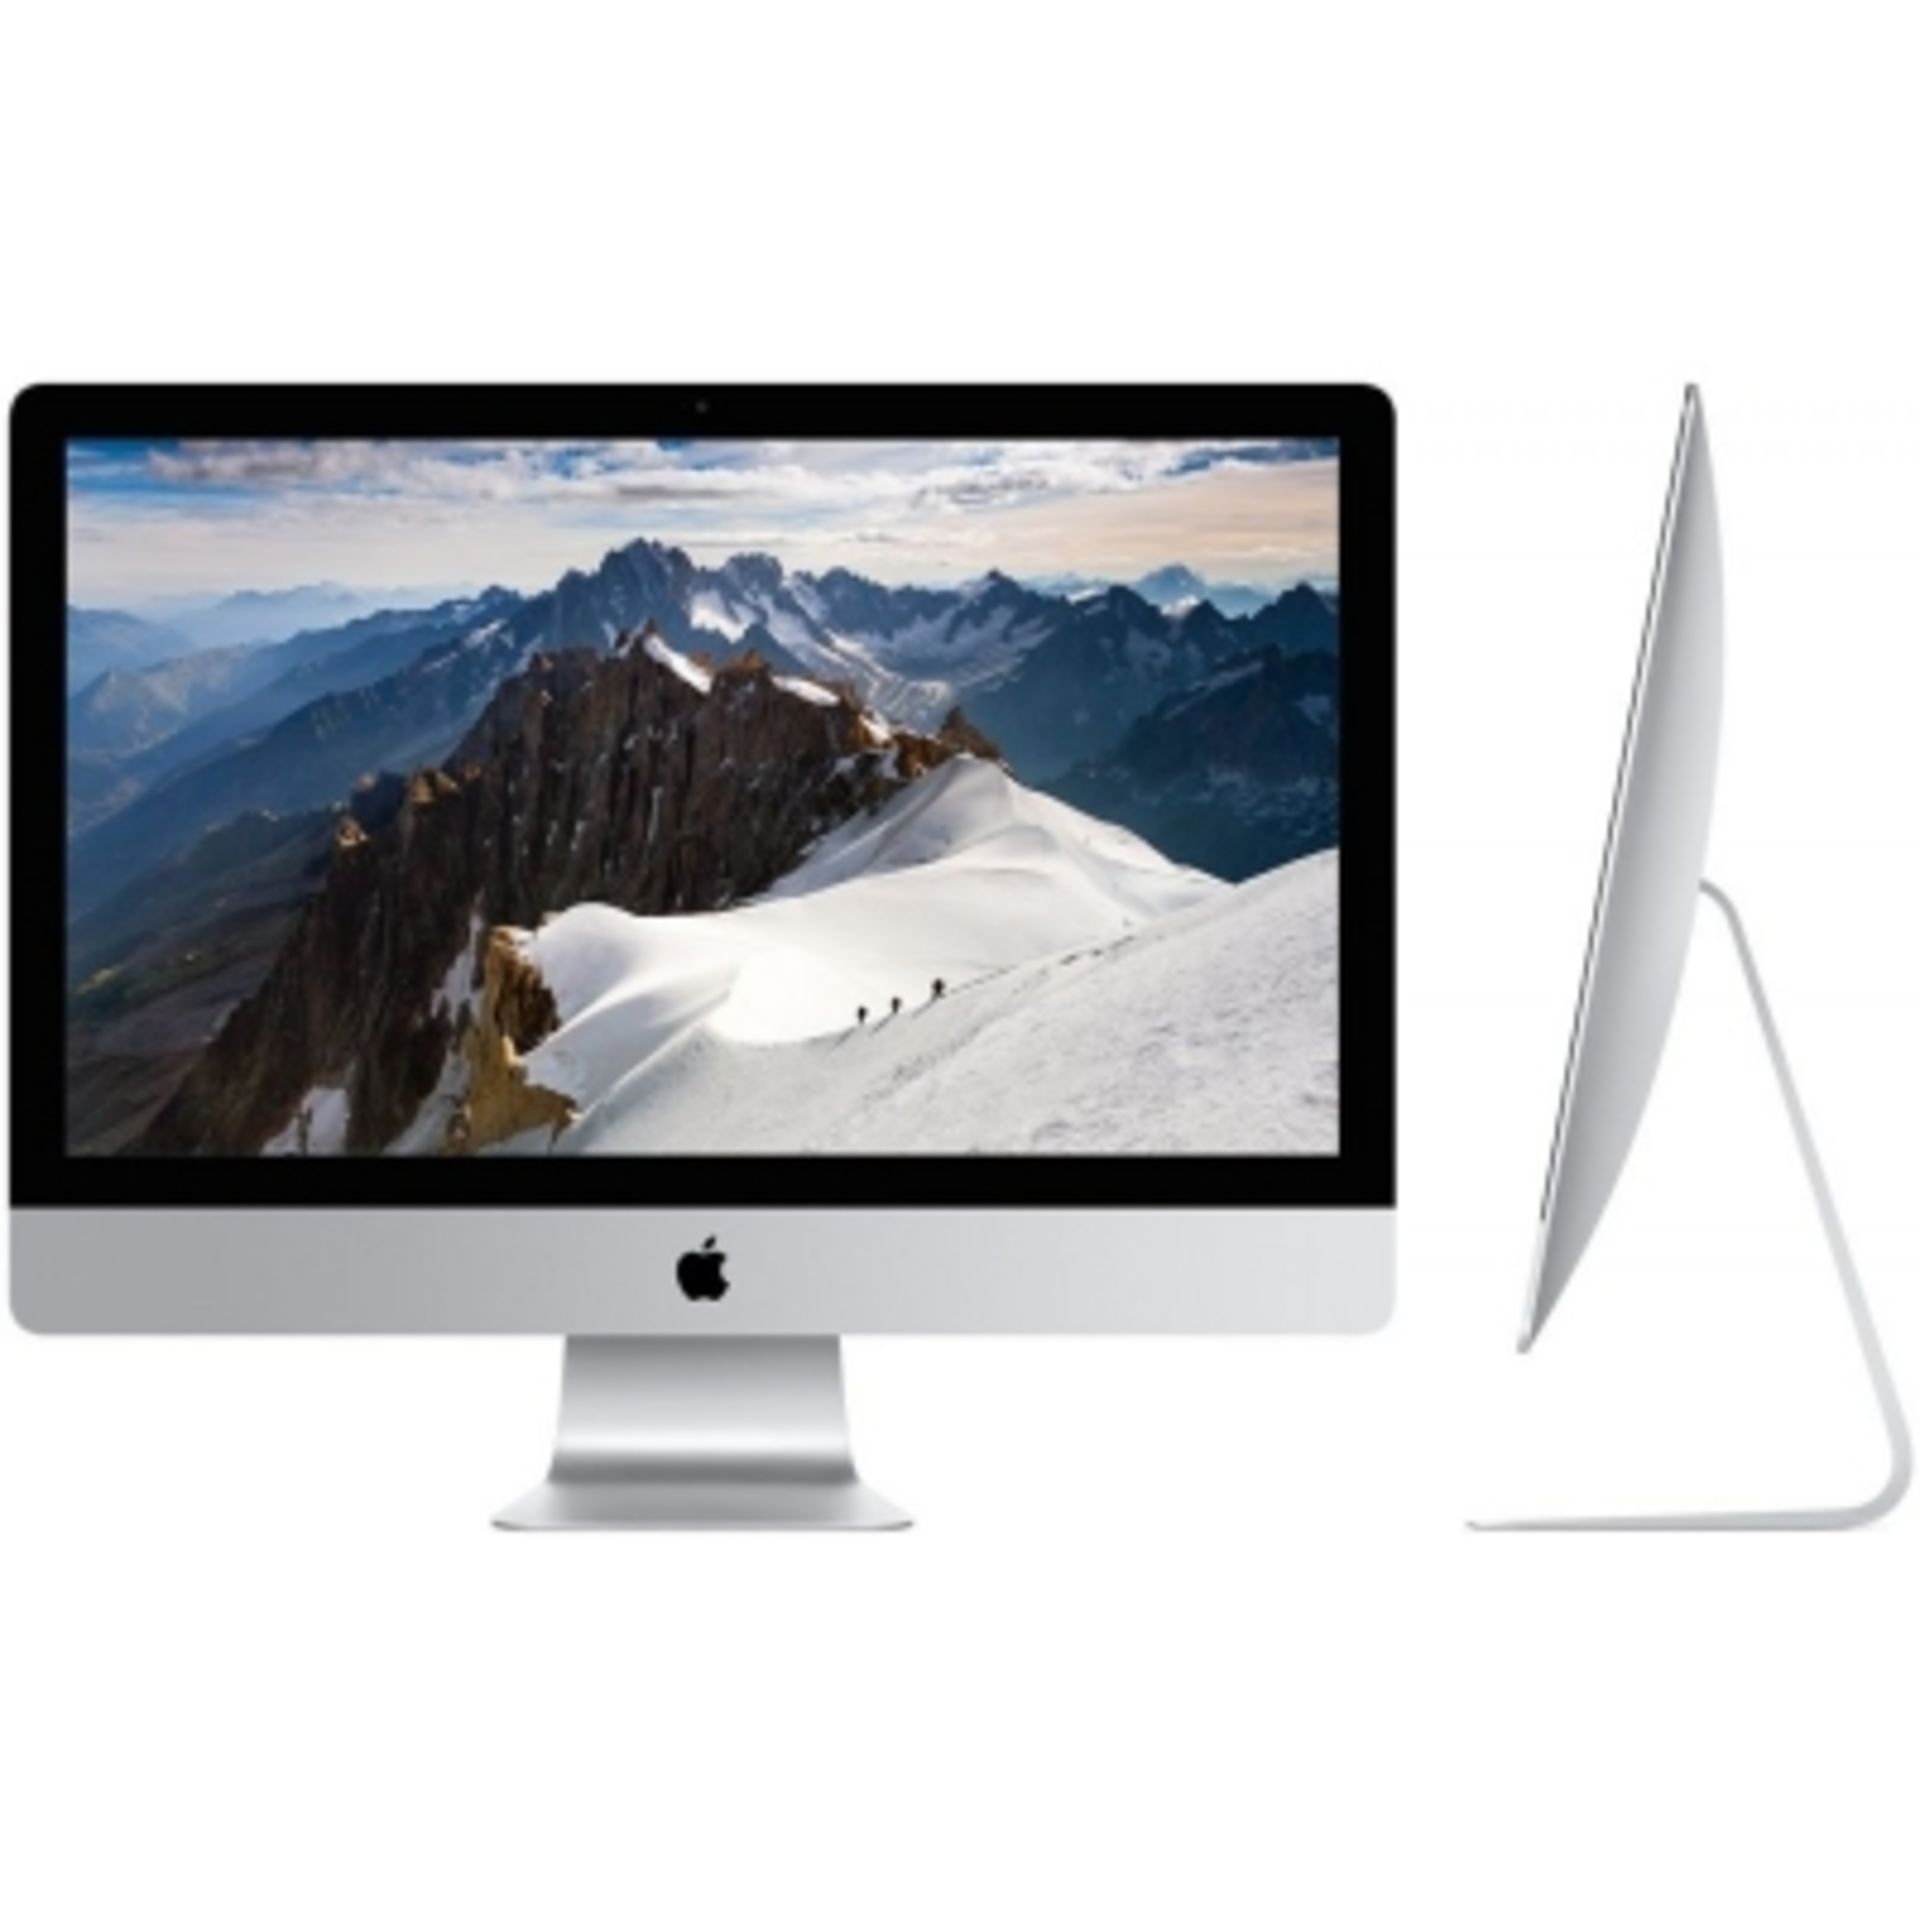 Apple iMac 27” A1419 Slim (2012) Intel Core i5 Quad Core 8GB Memory 1TB HD WiFi Office #1